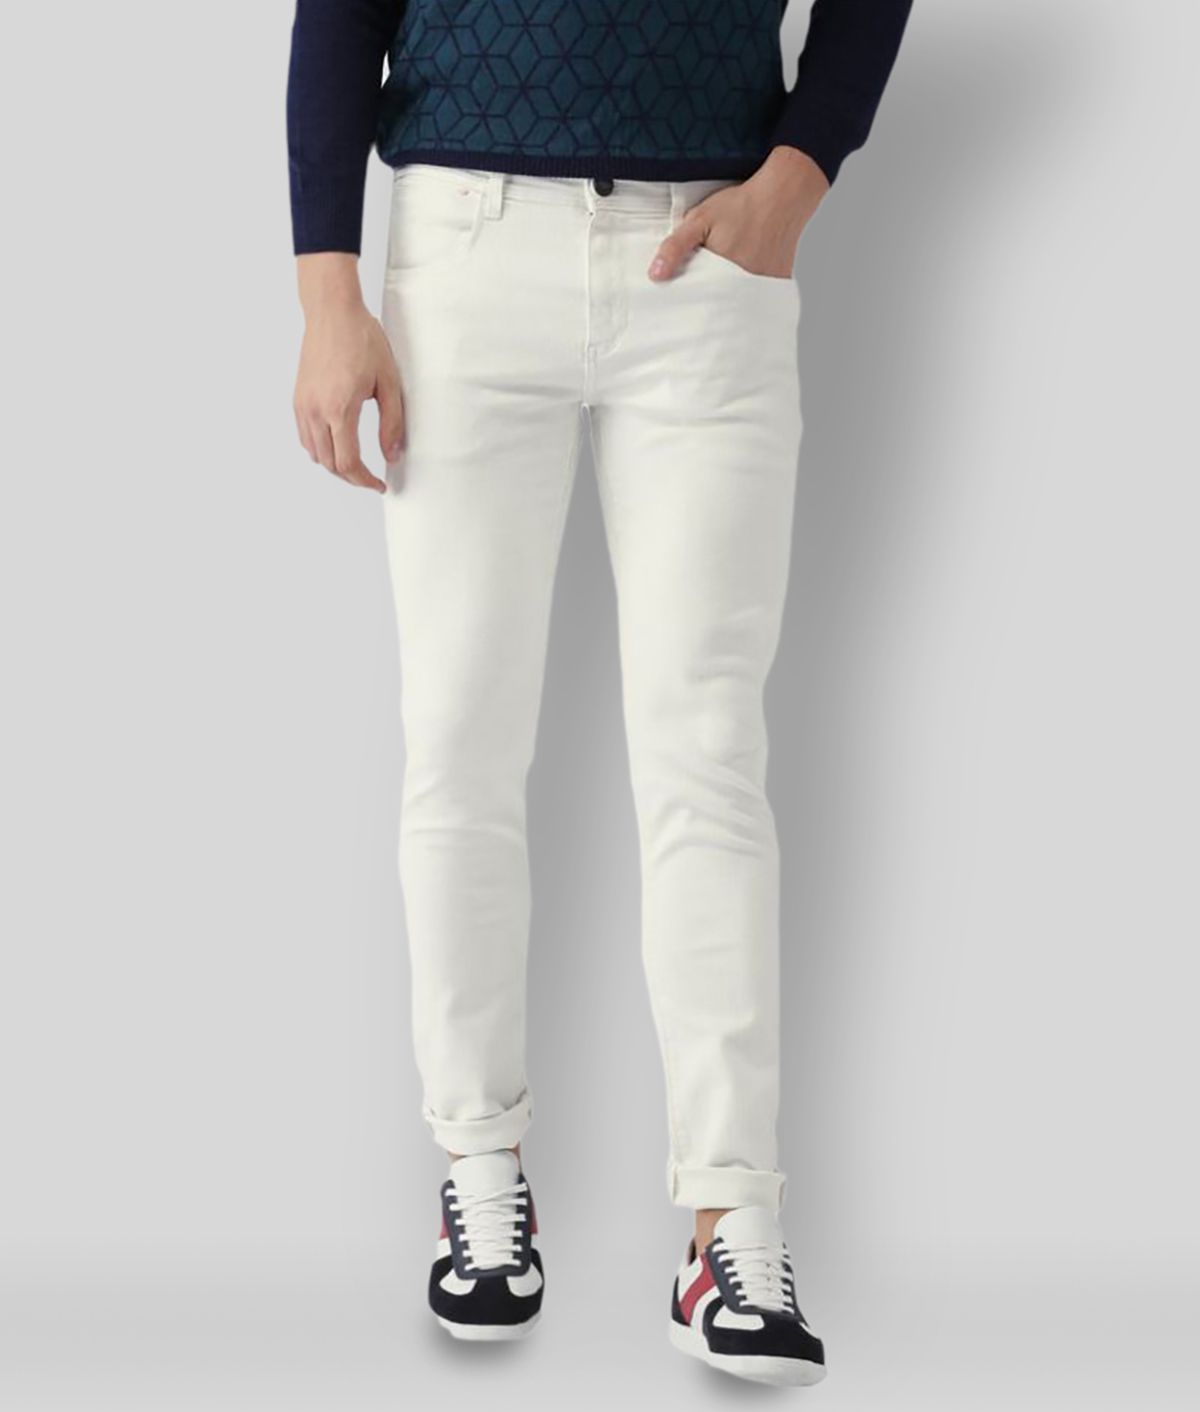     			HALOGEN - White Cotton Blend Skinny Men's Jeans ( Pack of 1 )